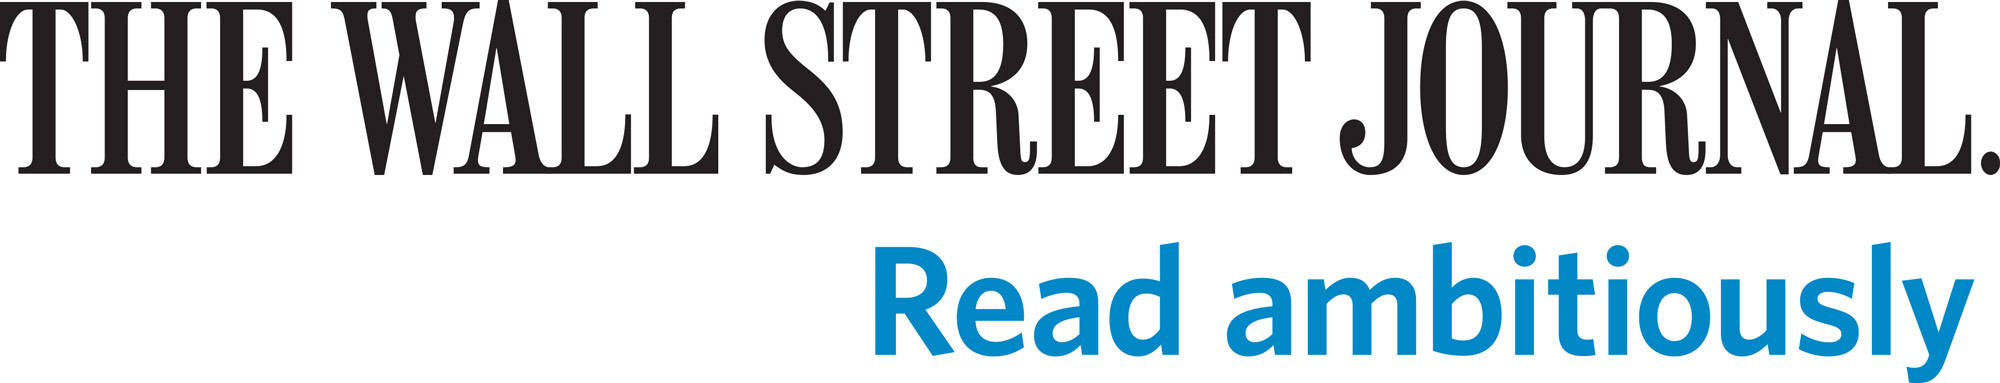 Wall Street Journal Logo - Media Partner Kansai Resilience Forum Japan